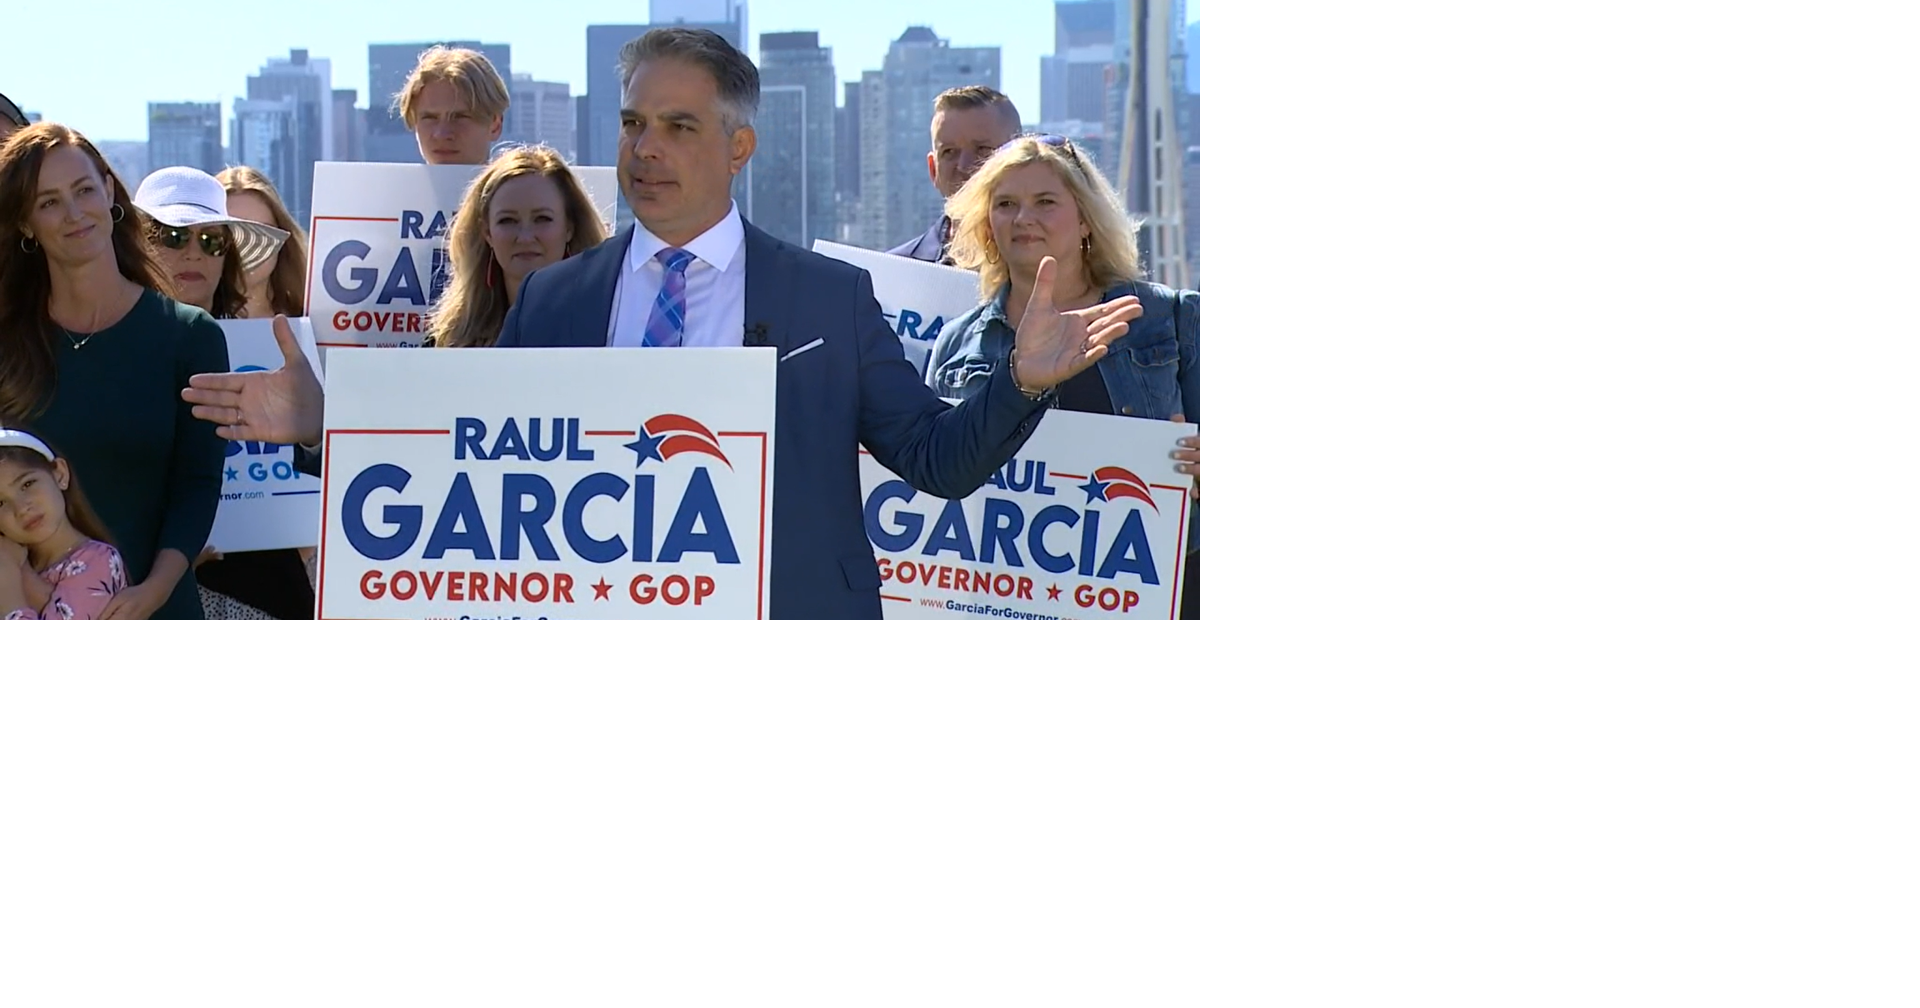 Raul Garcia Announces His Campaign For Washington Governor 4913